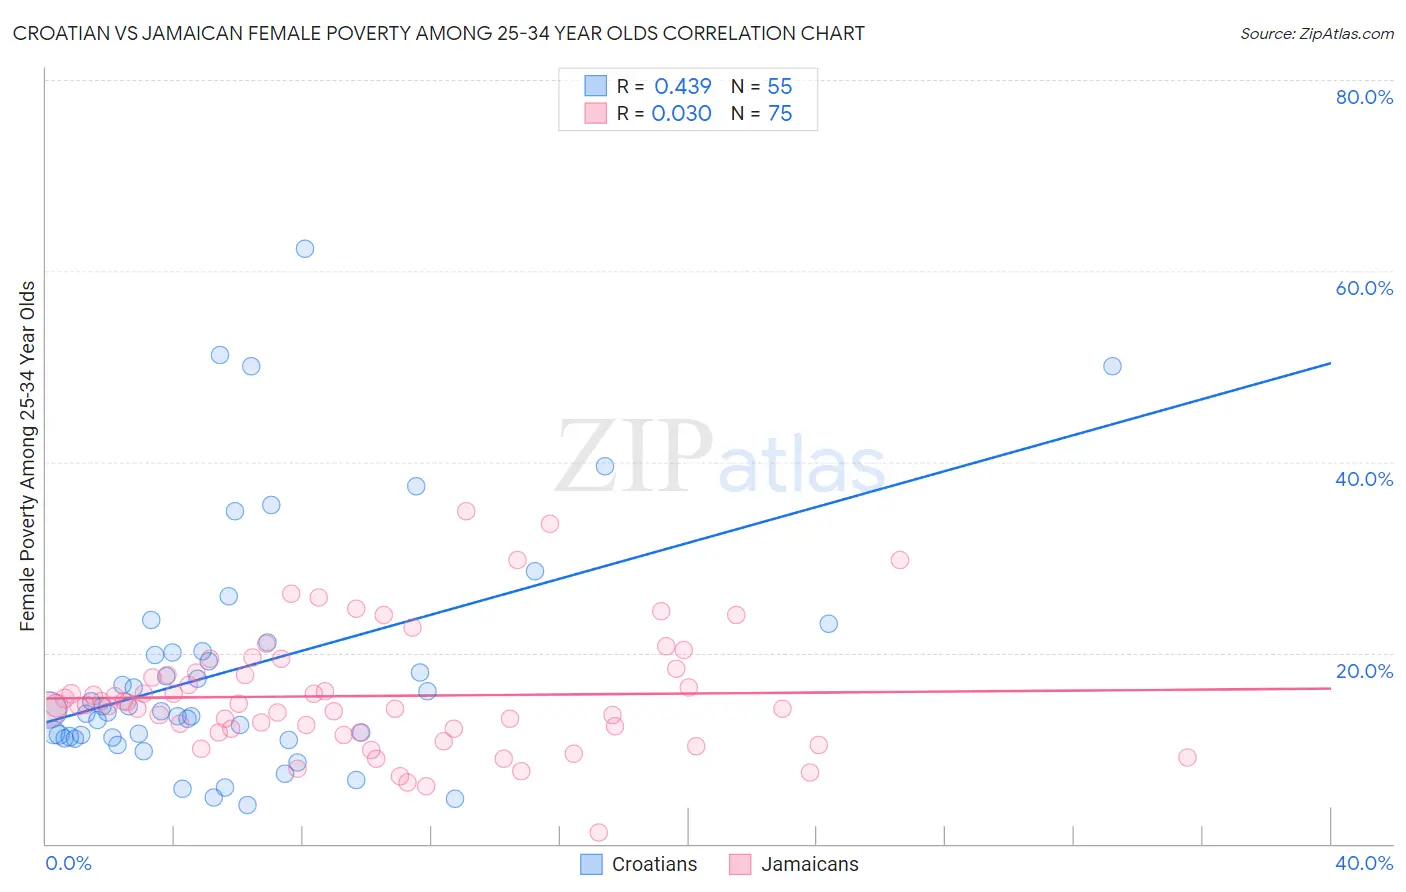 Croatian vs Jamaican Female Poverty Among 25-34 Year Olds